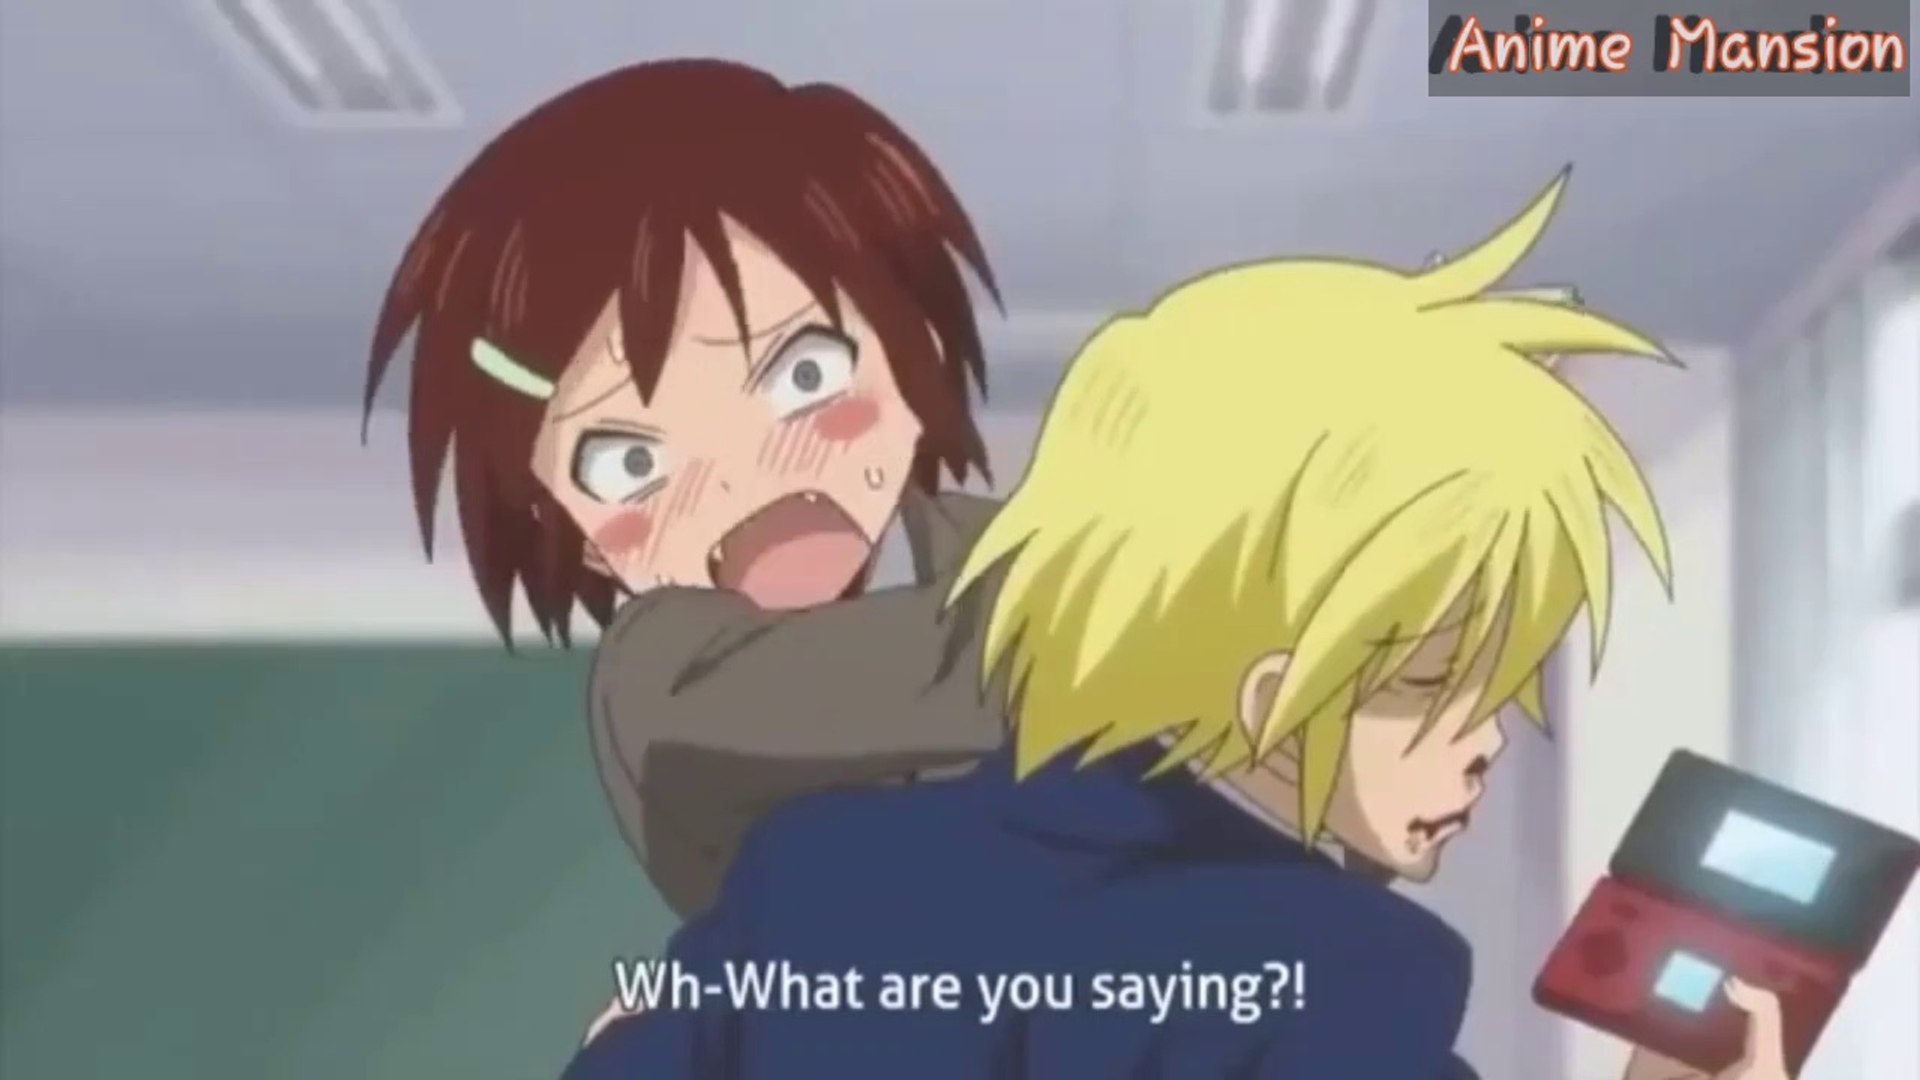 Funniest slaps in anime. Anime funnu slapped scenes - video Dailymotion